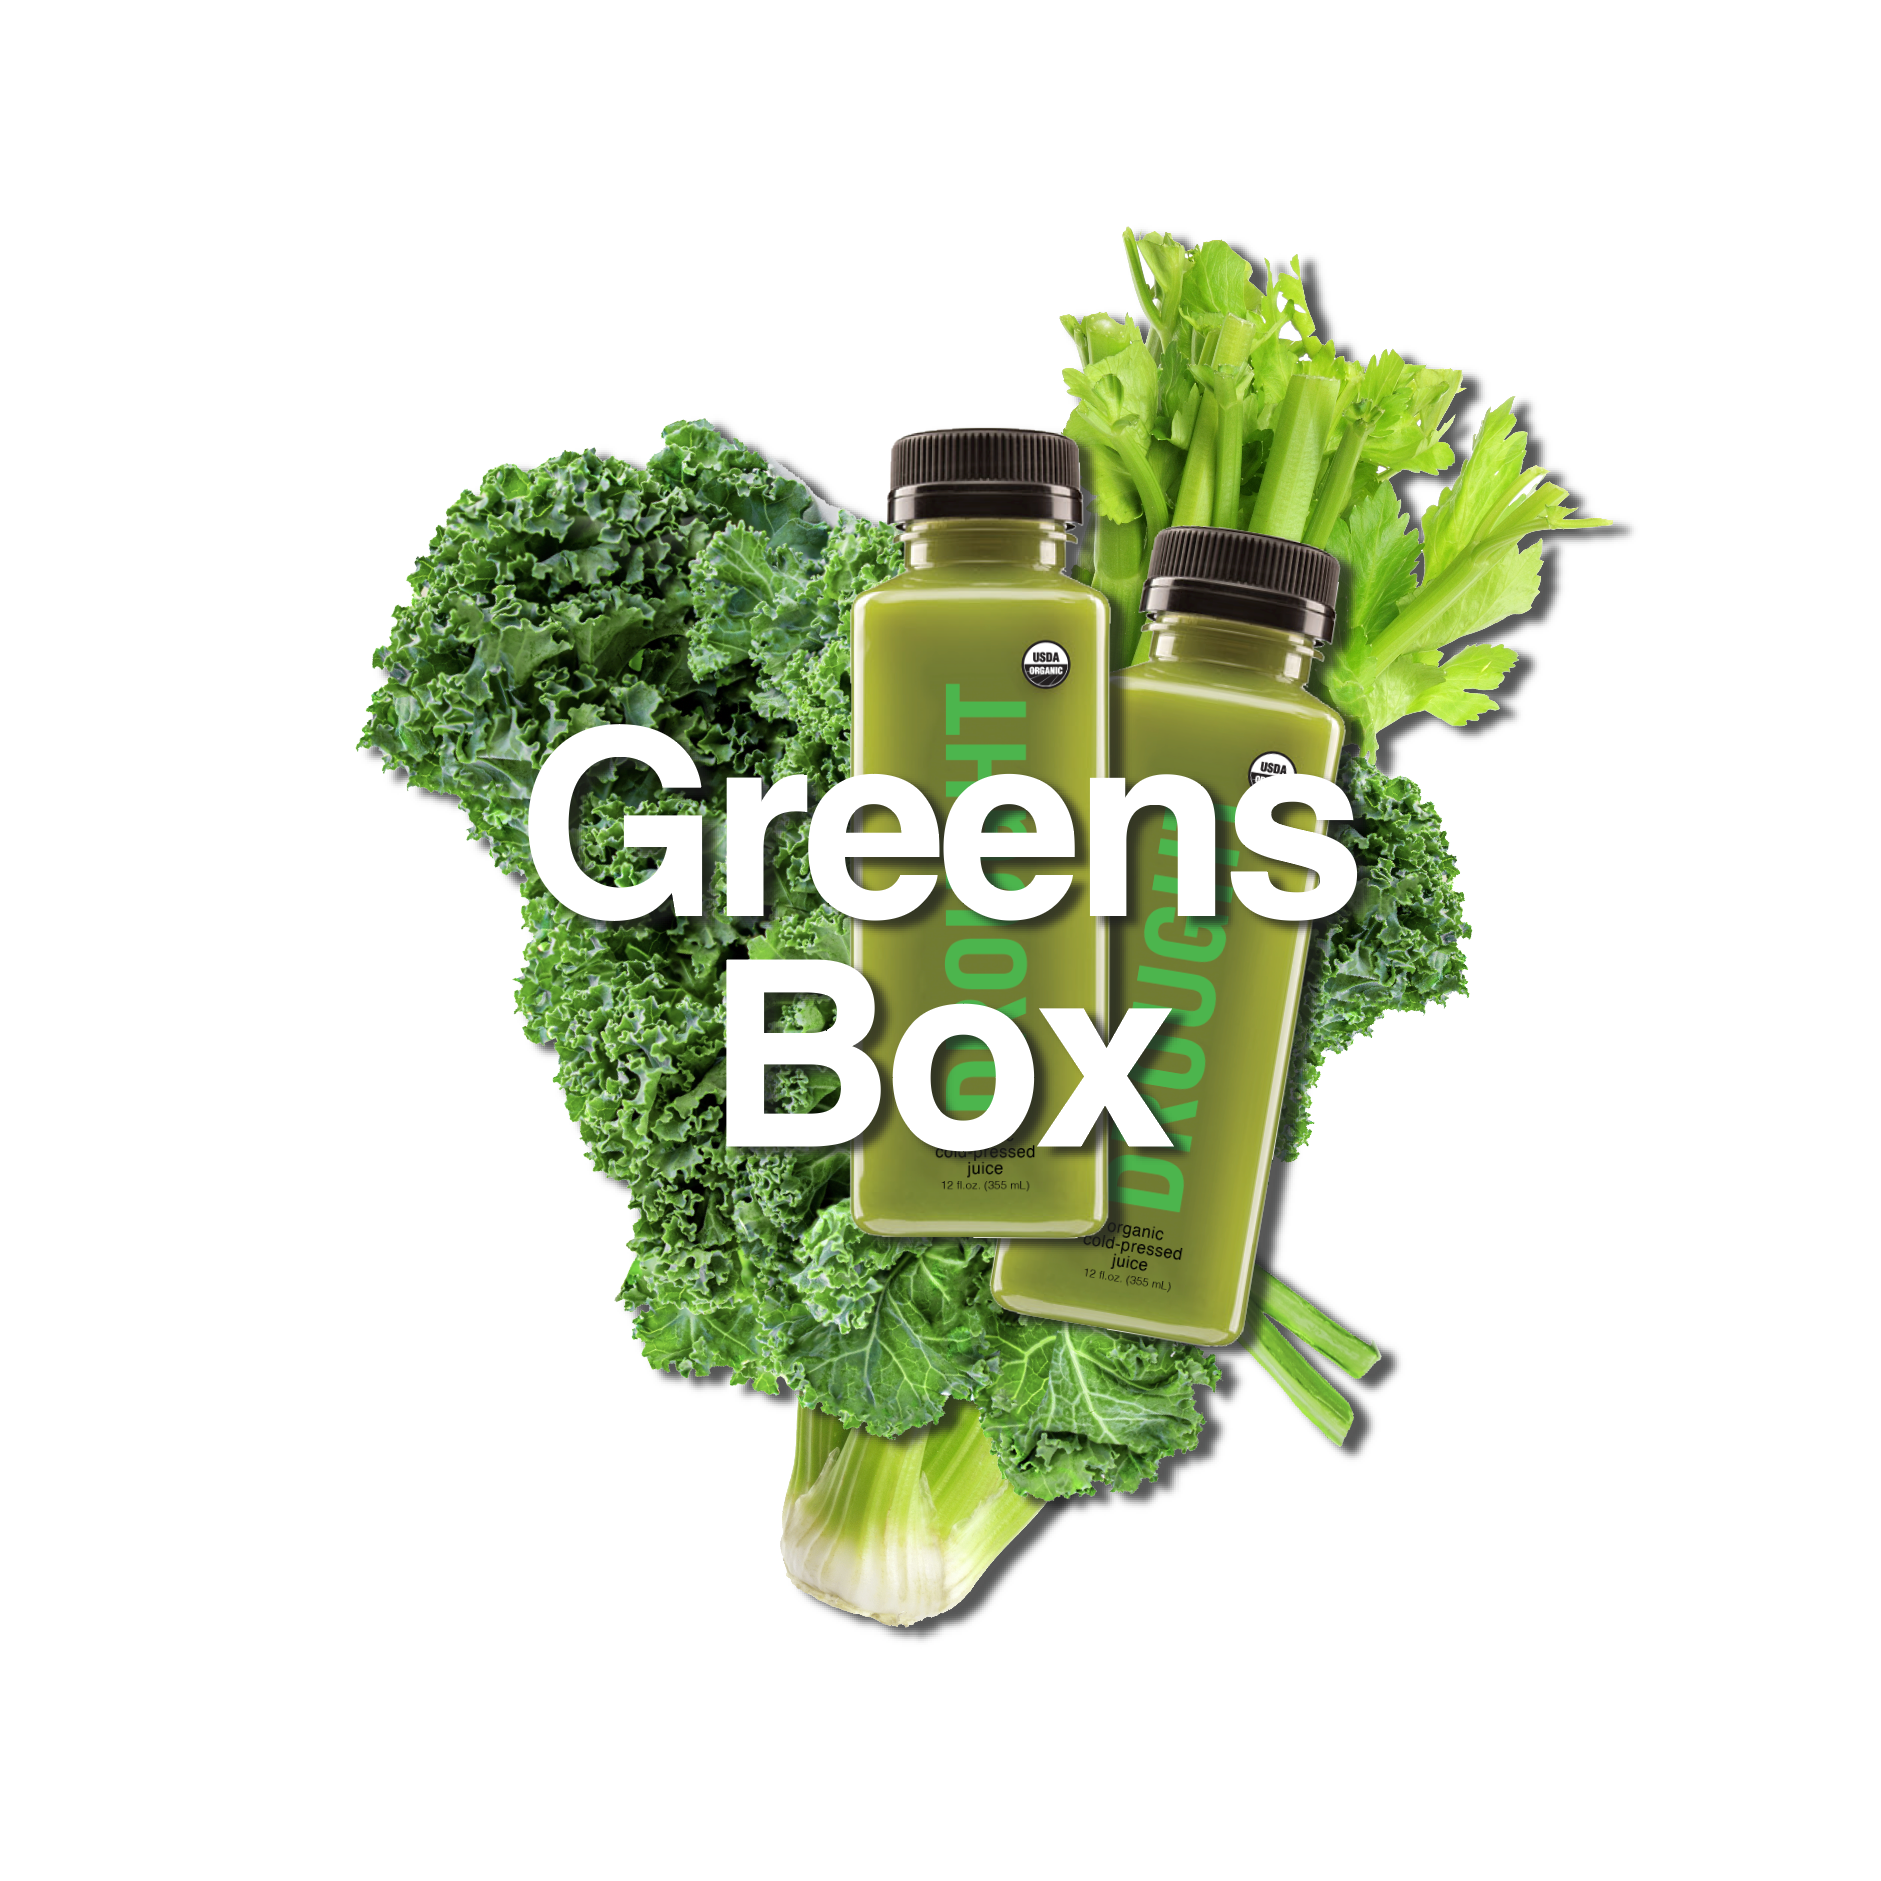 Greens Box